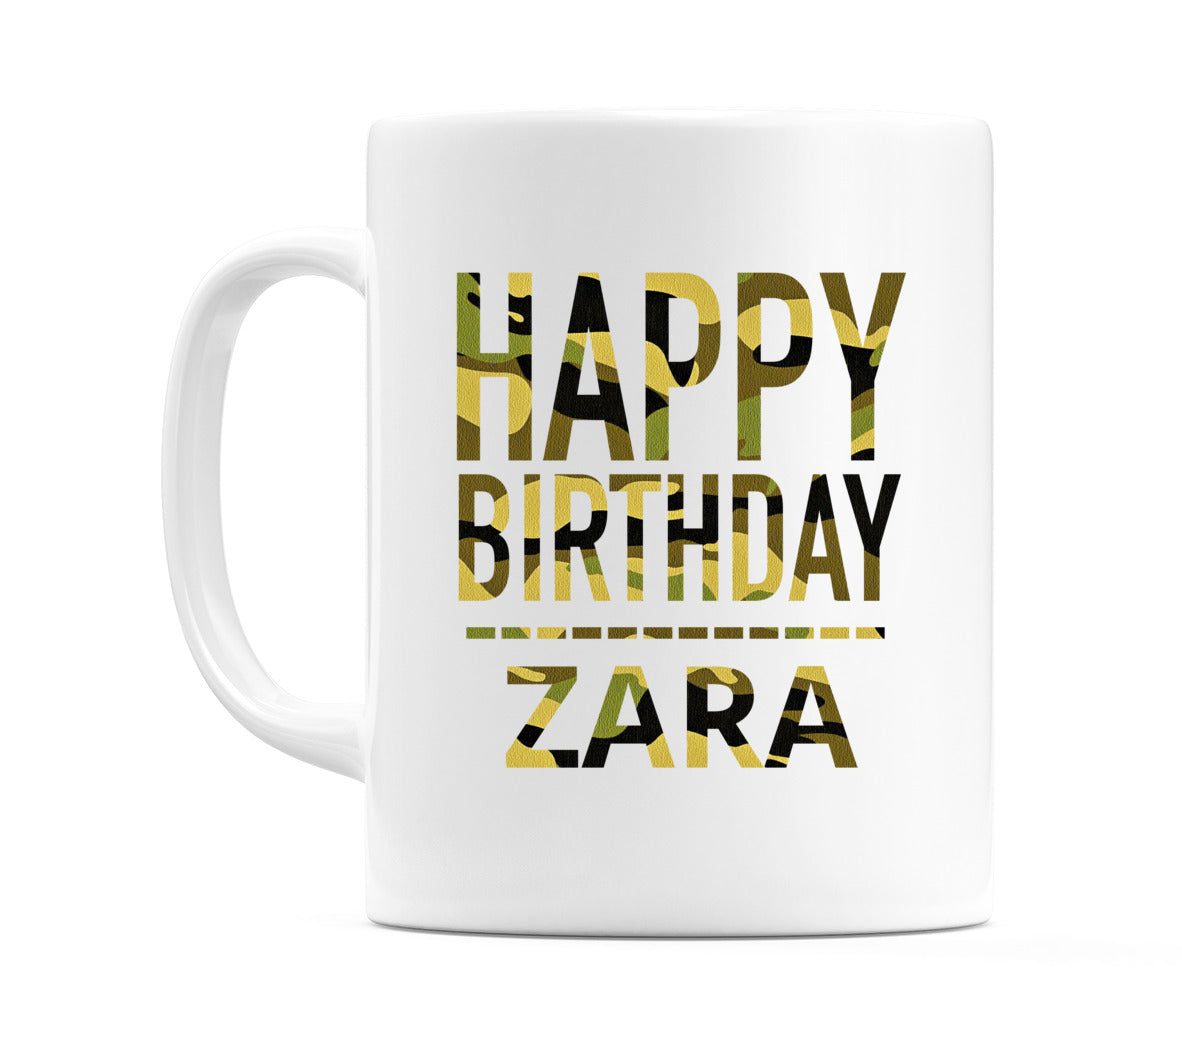 Happy Birthday Zara (Camo) Mug Cup by WeDoMugs